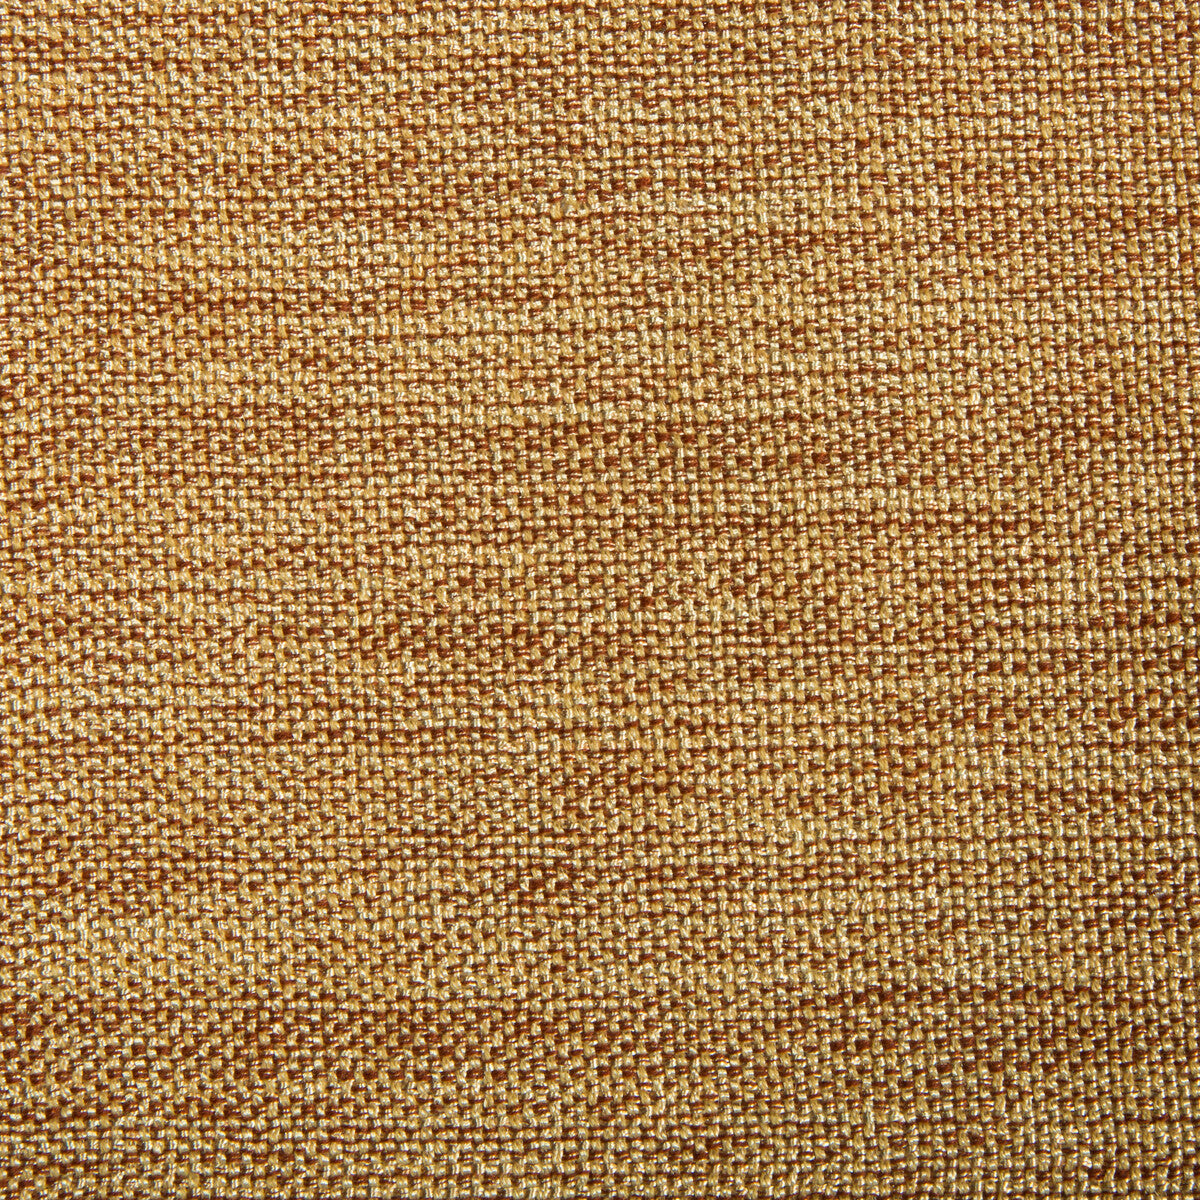 Kravet Smart fabric in 34939-1624 color - pattern 34939.1624.0 - by Kravet Smart